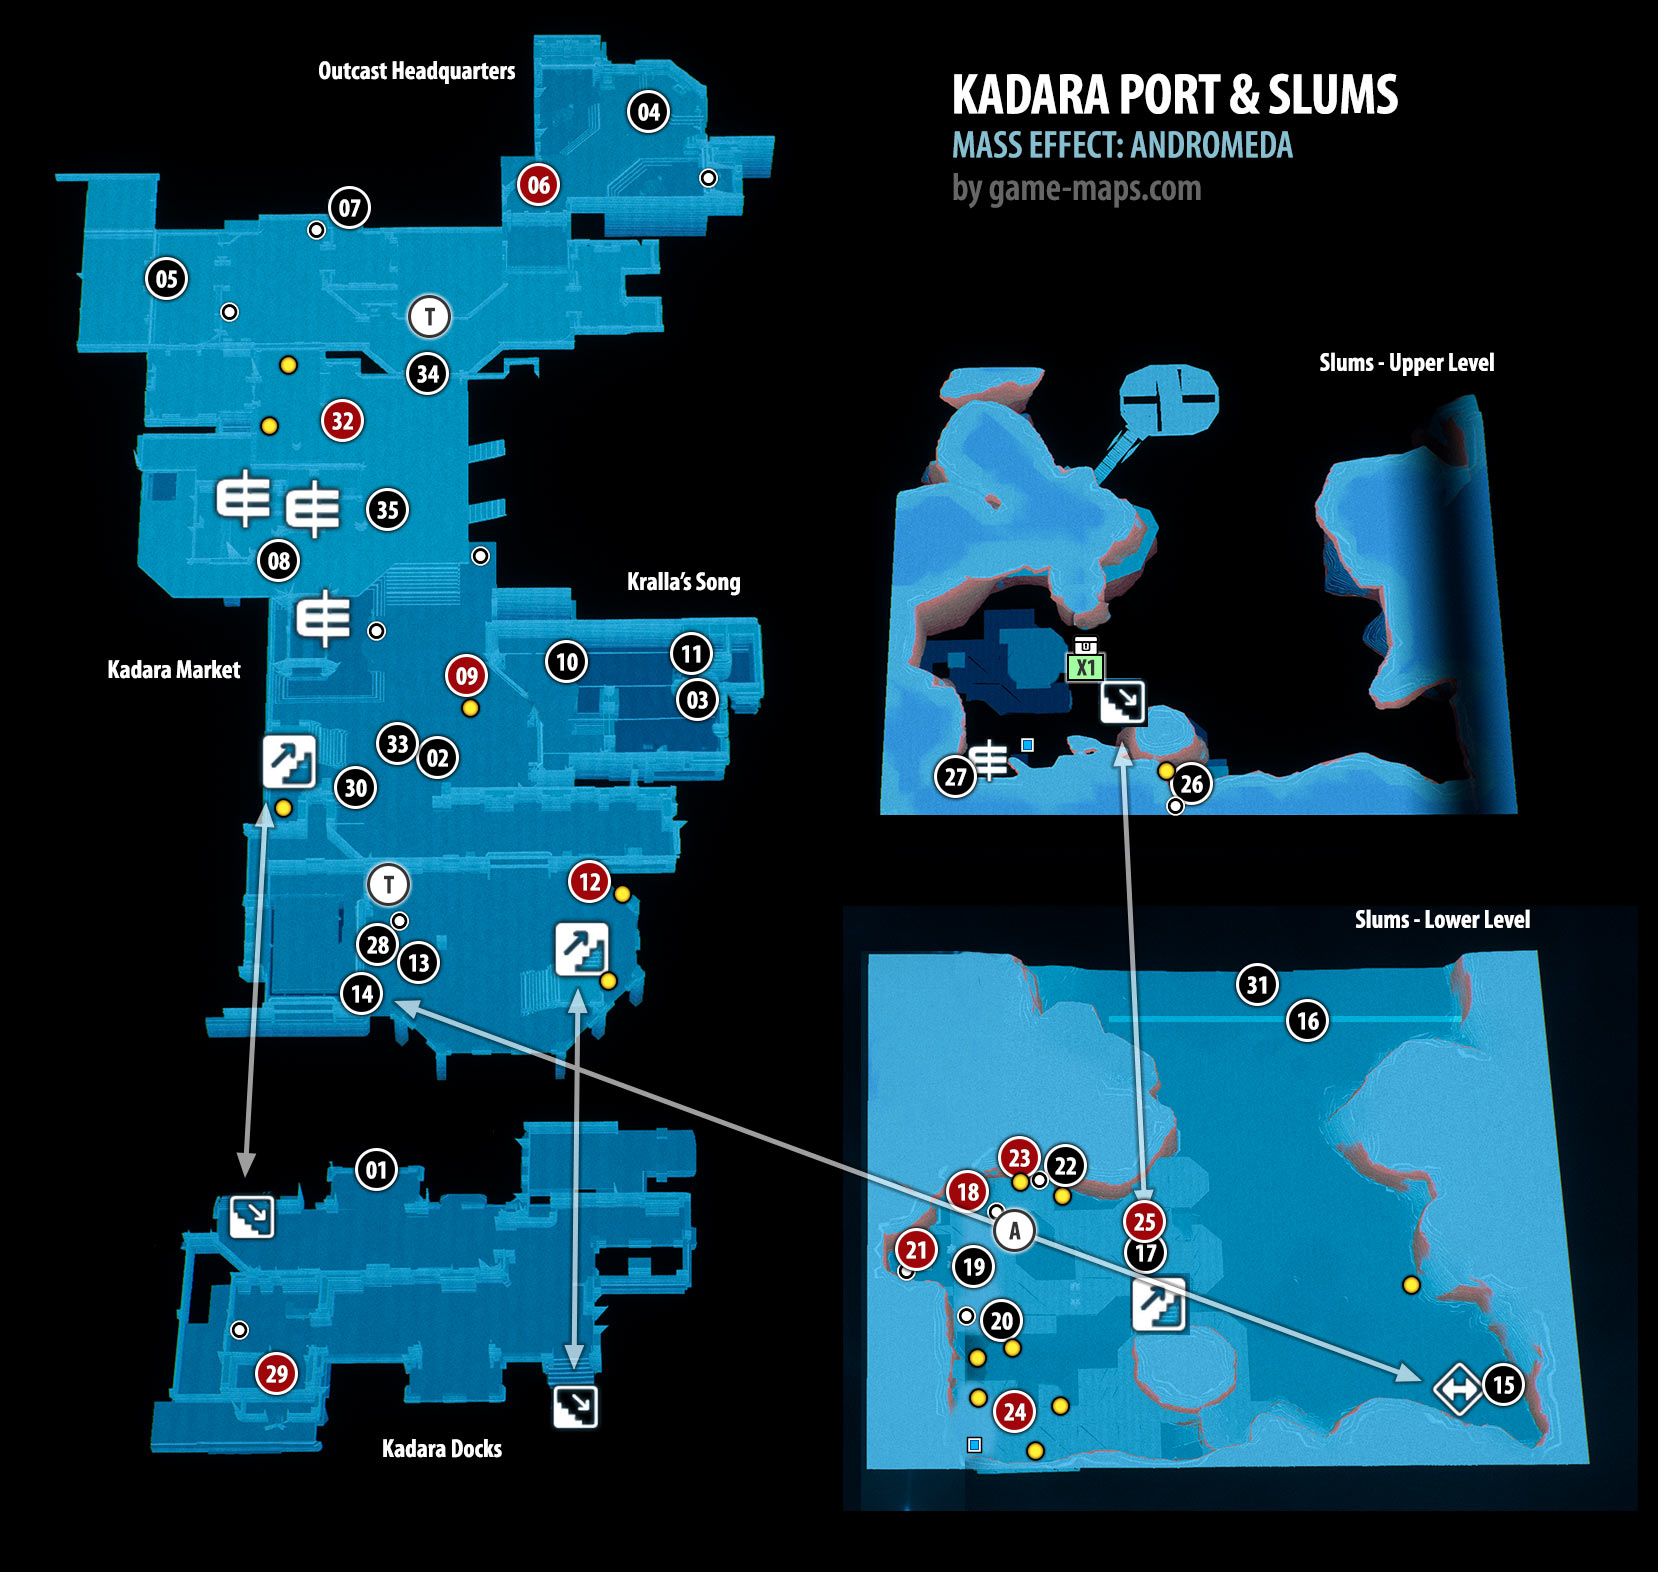 Kadara Port & Slums Map for Mass Effect Andromeda